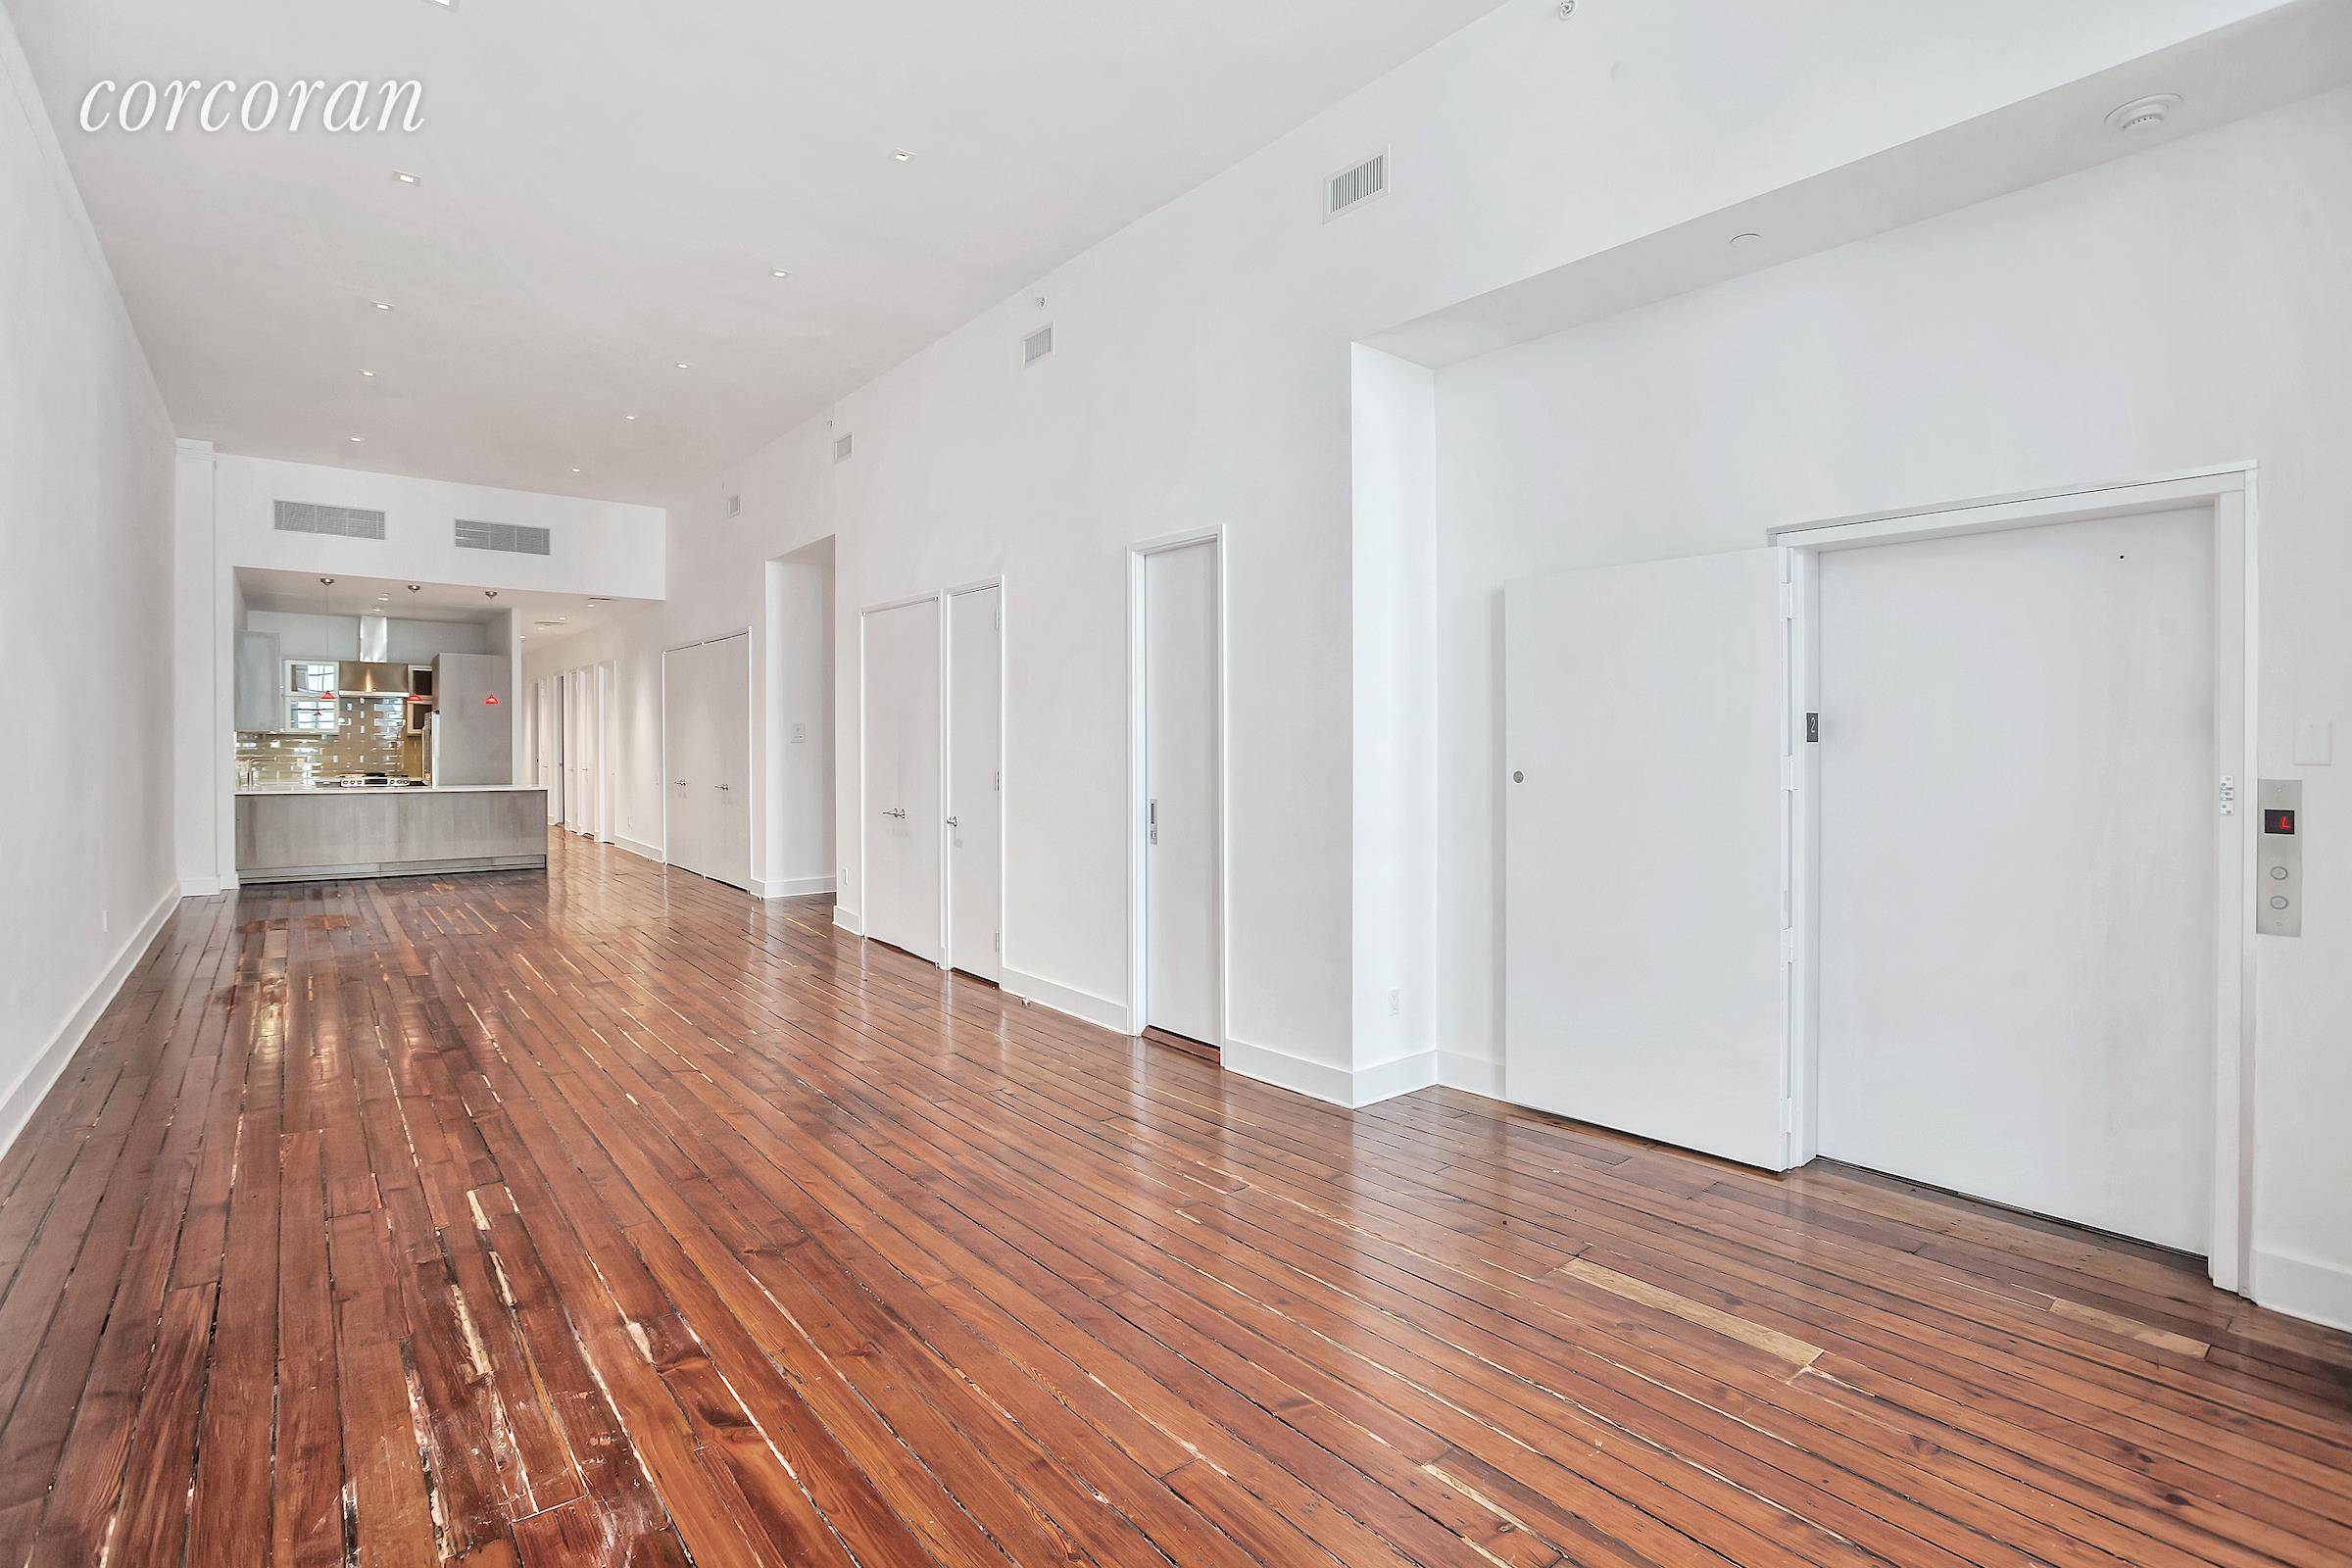 A true Soho loft located in the heart of Soho, 577 Broadway is a 3 bedroom, 3 bathroom, 2, 500 square foot loft.